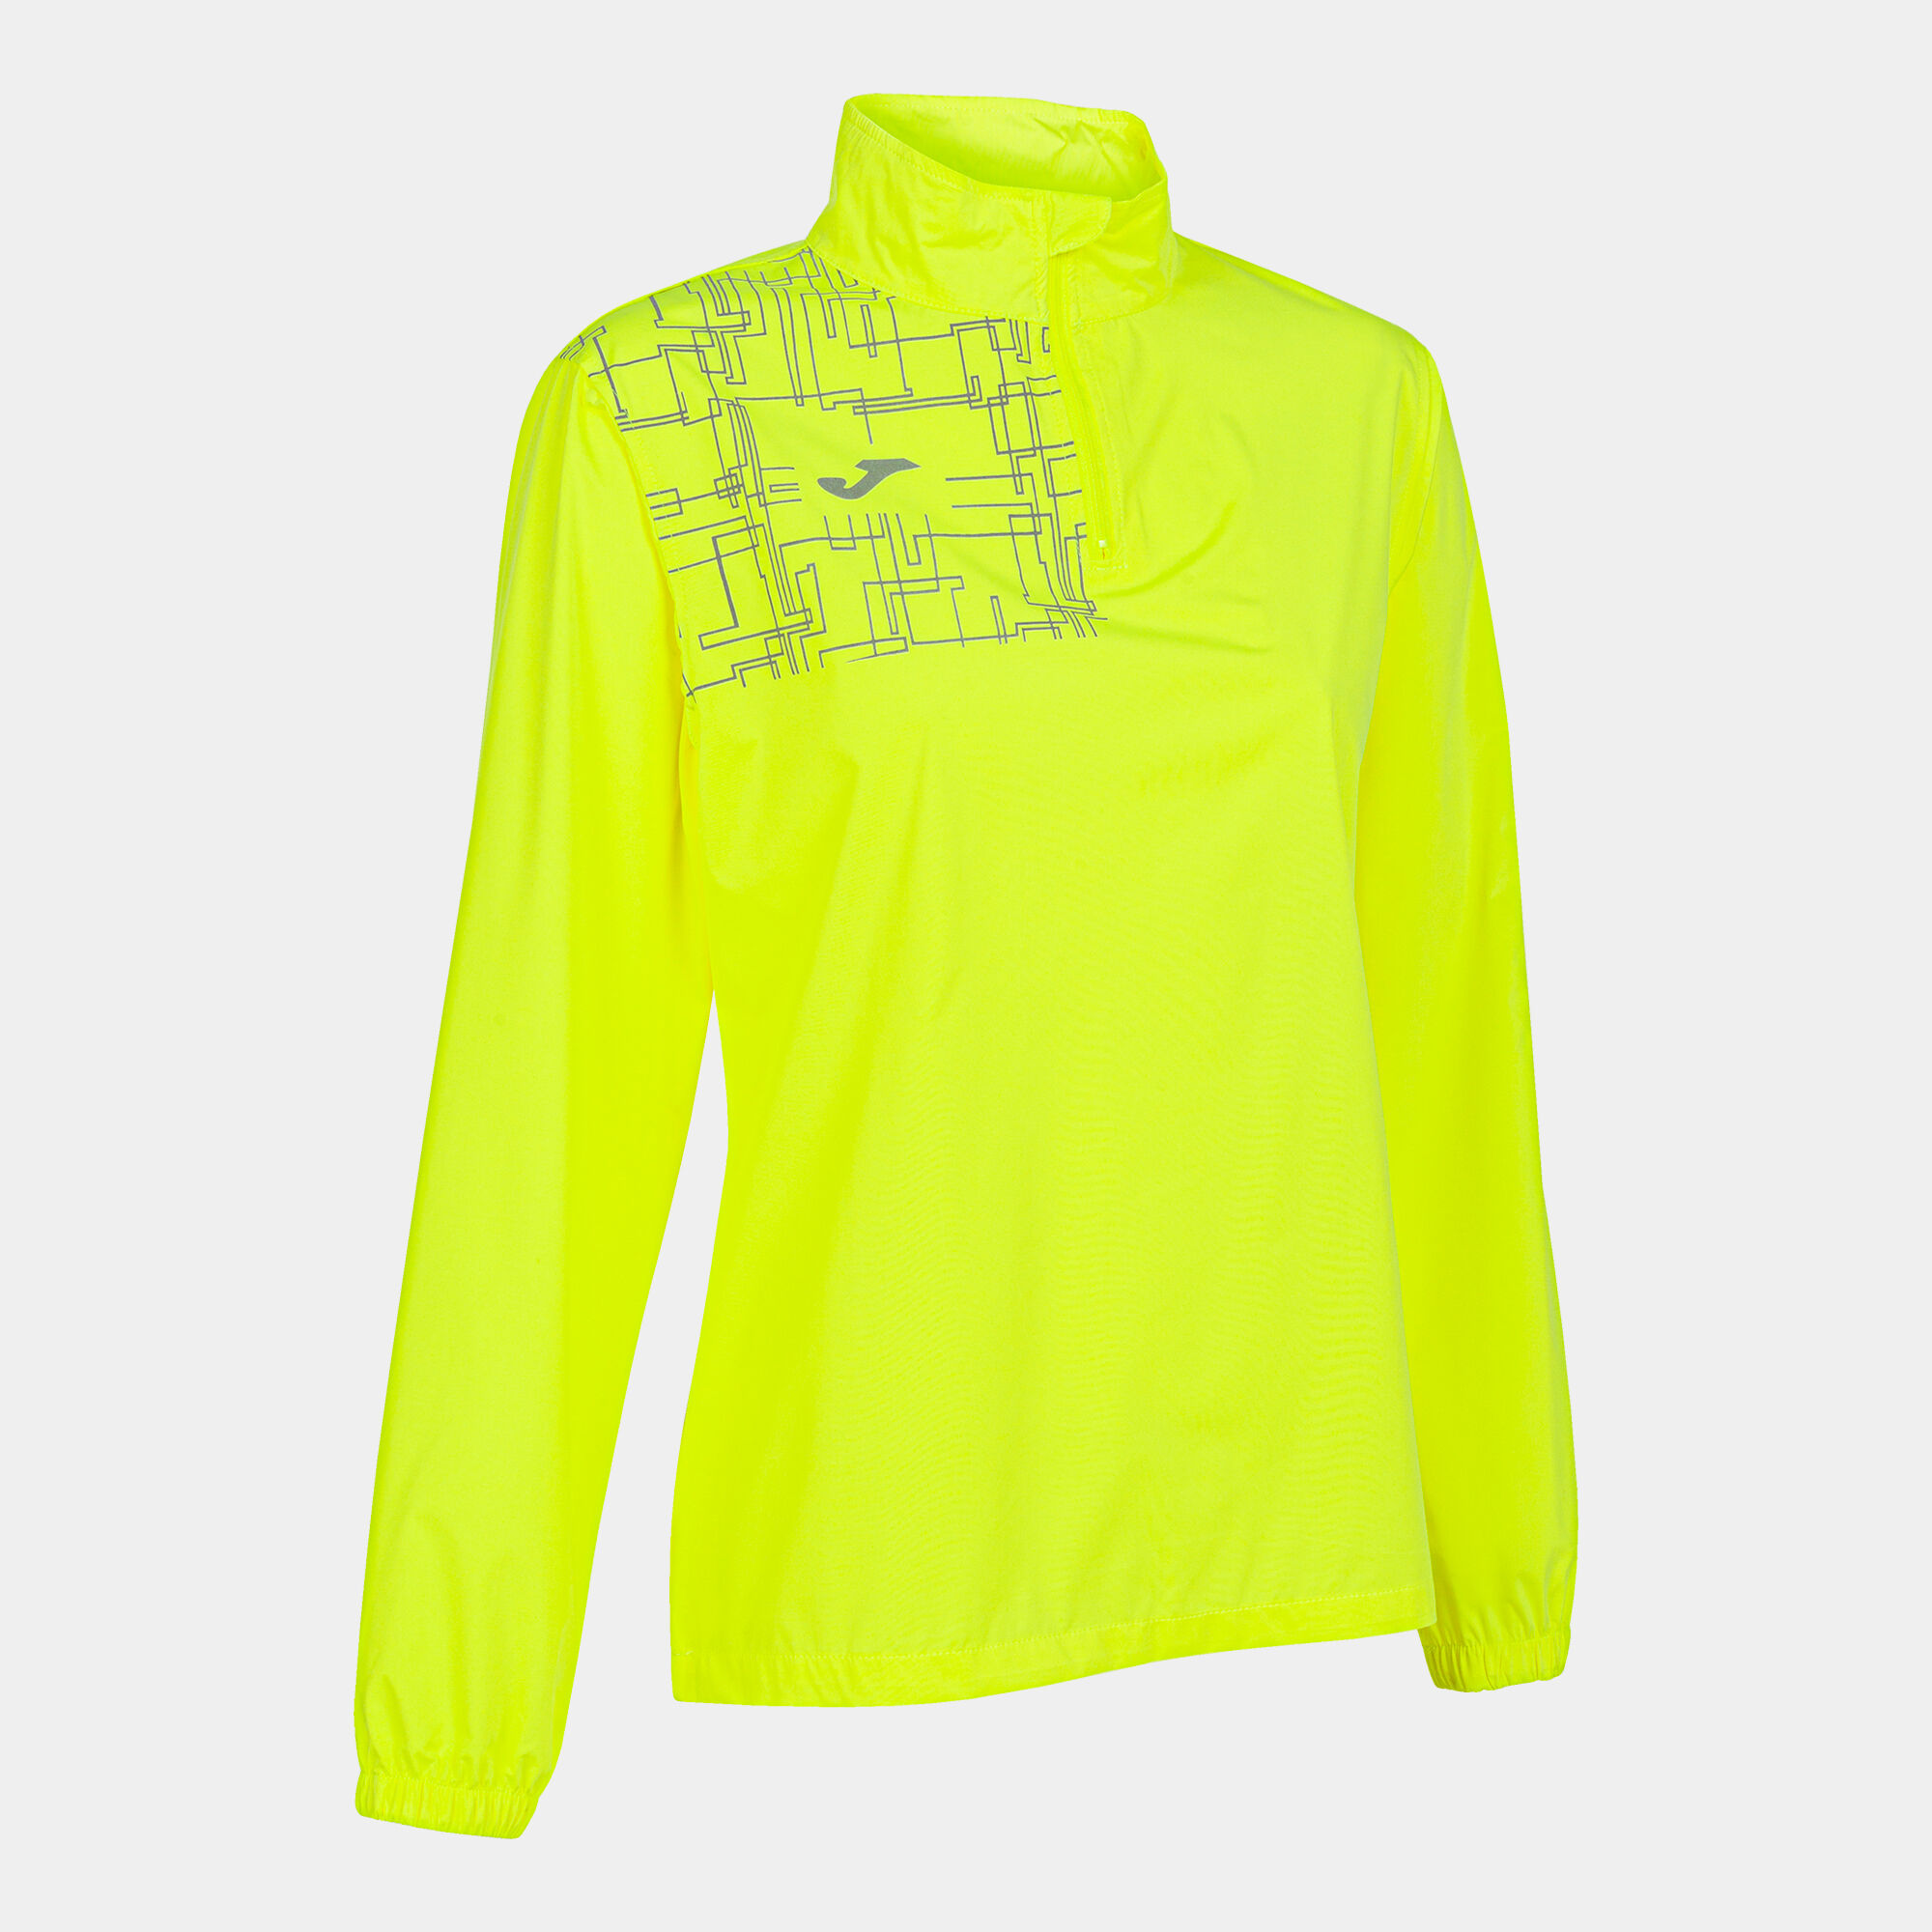 Sweat-shirt femme Elite VIII jaune fluo